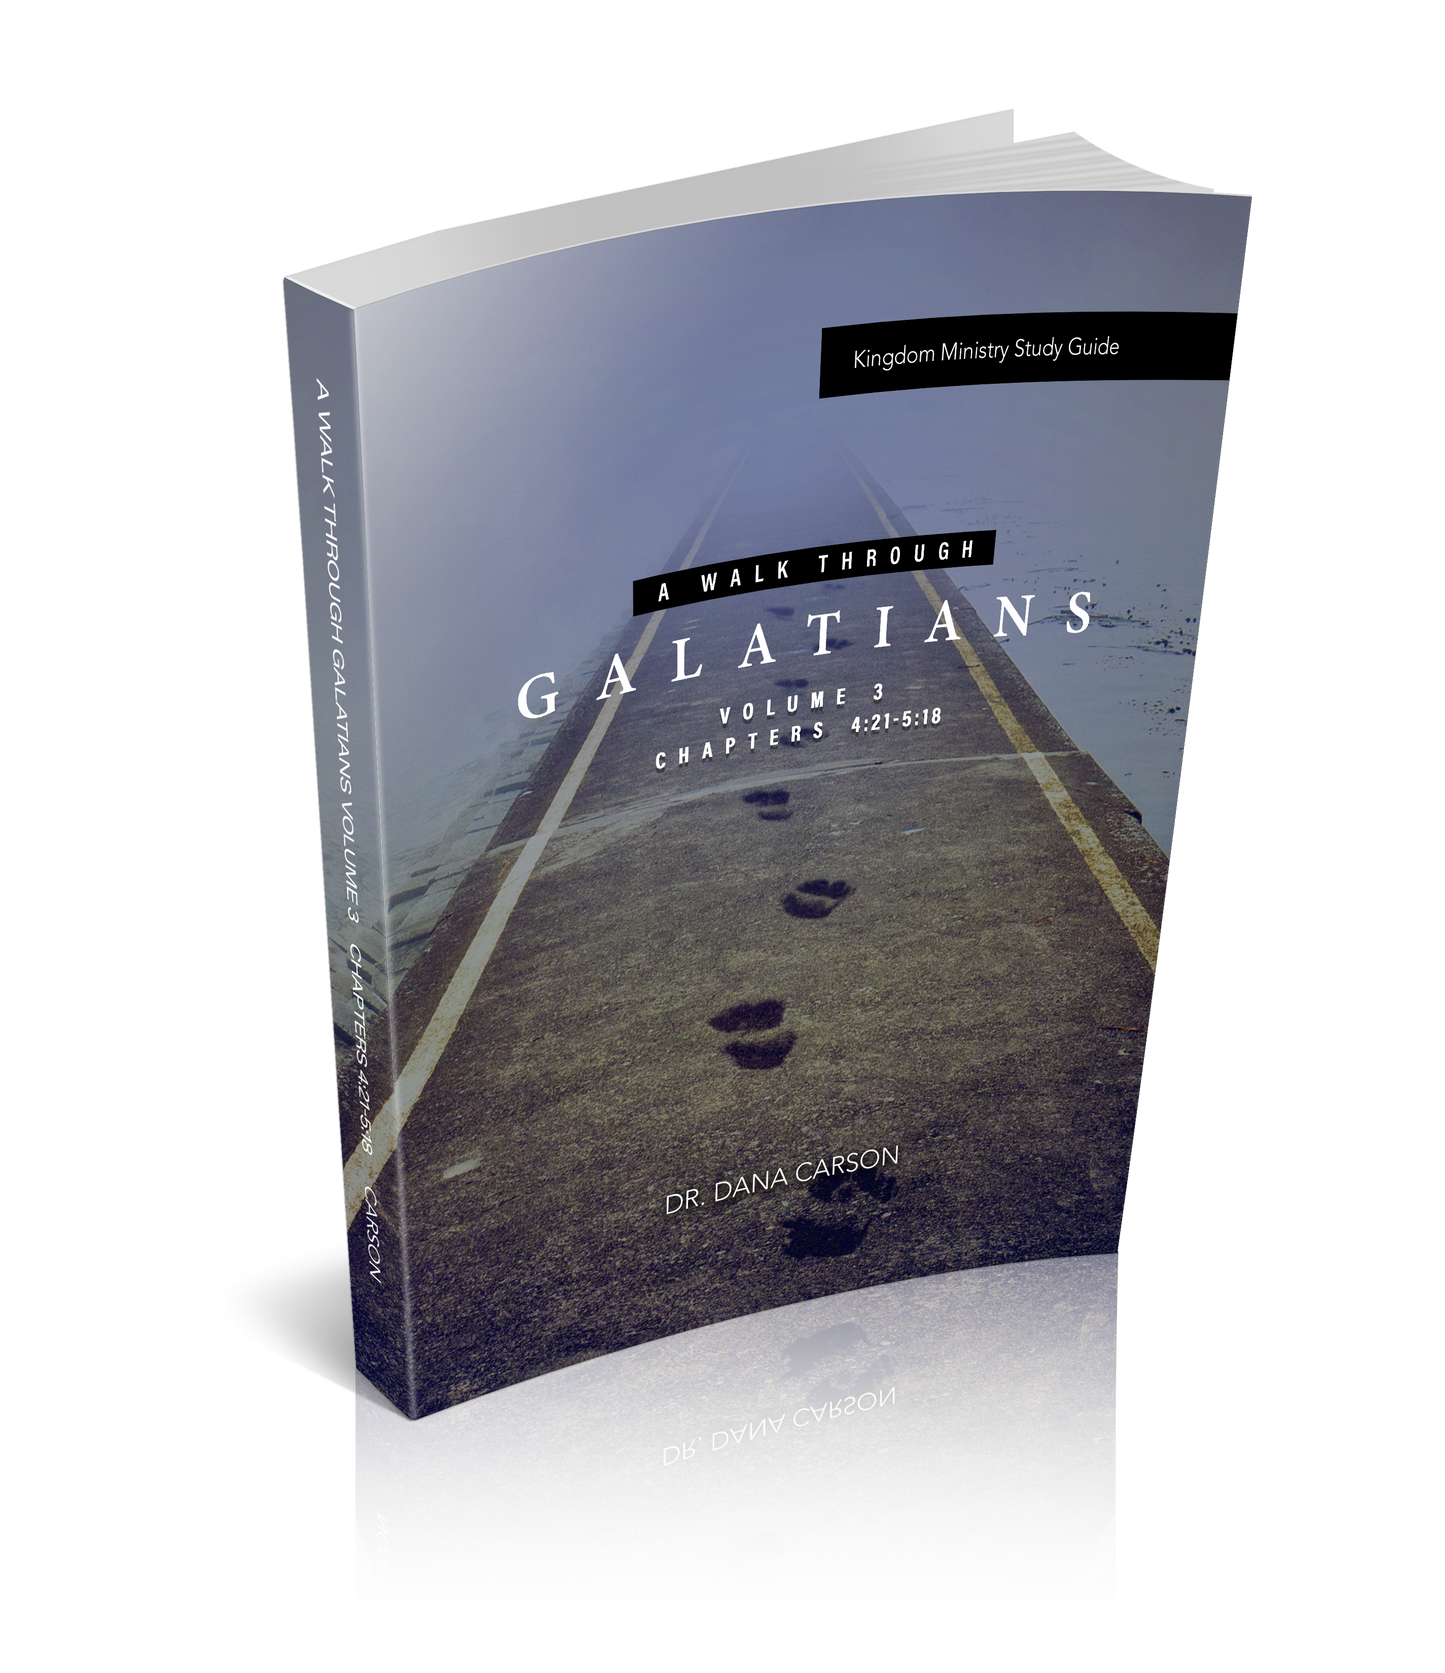 A Walk Through Galatians Volume 3 Kingdom Bible Study Guide